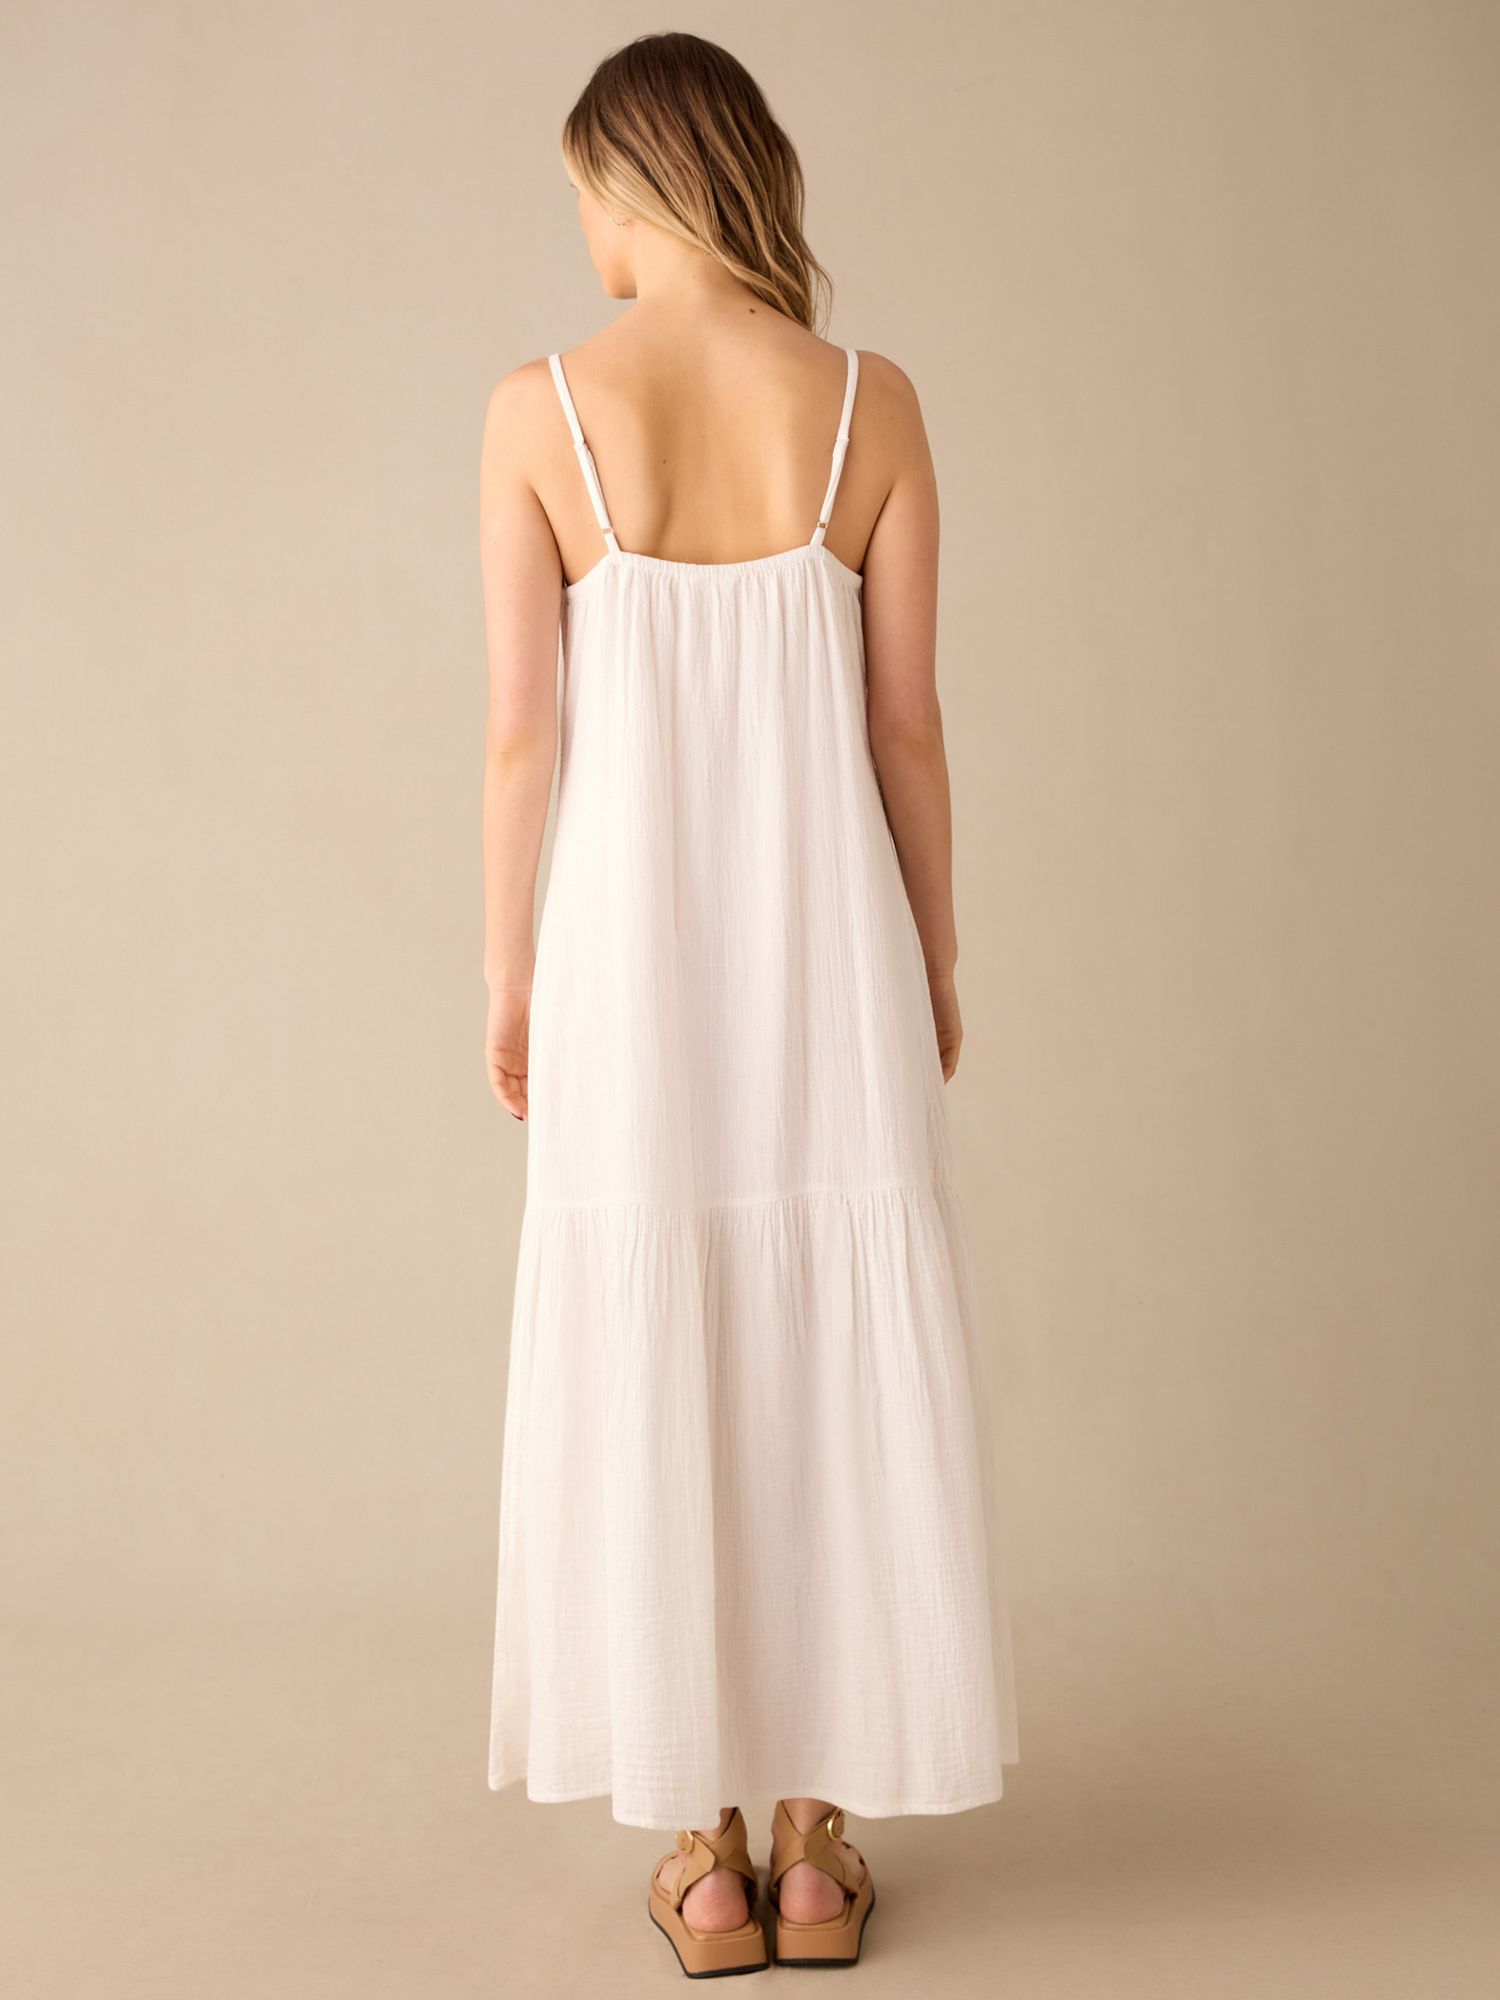 Ro&Zo Tiered Hem Strappy Cheesecloth Dress, White, 6